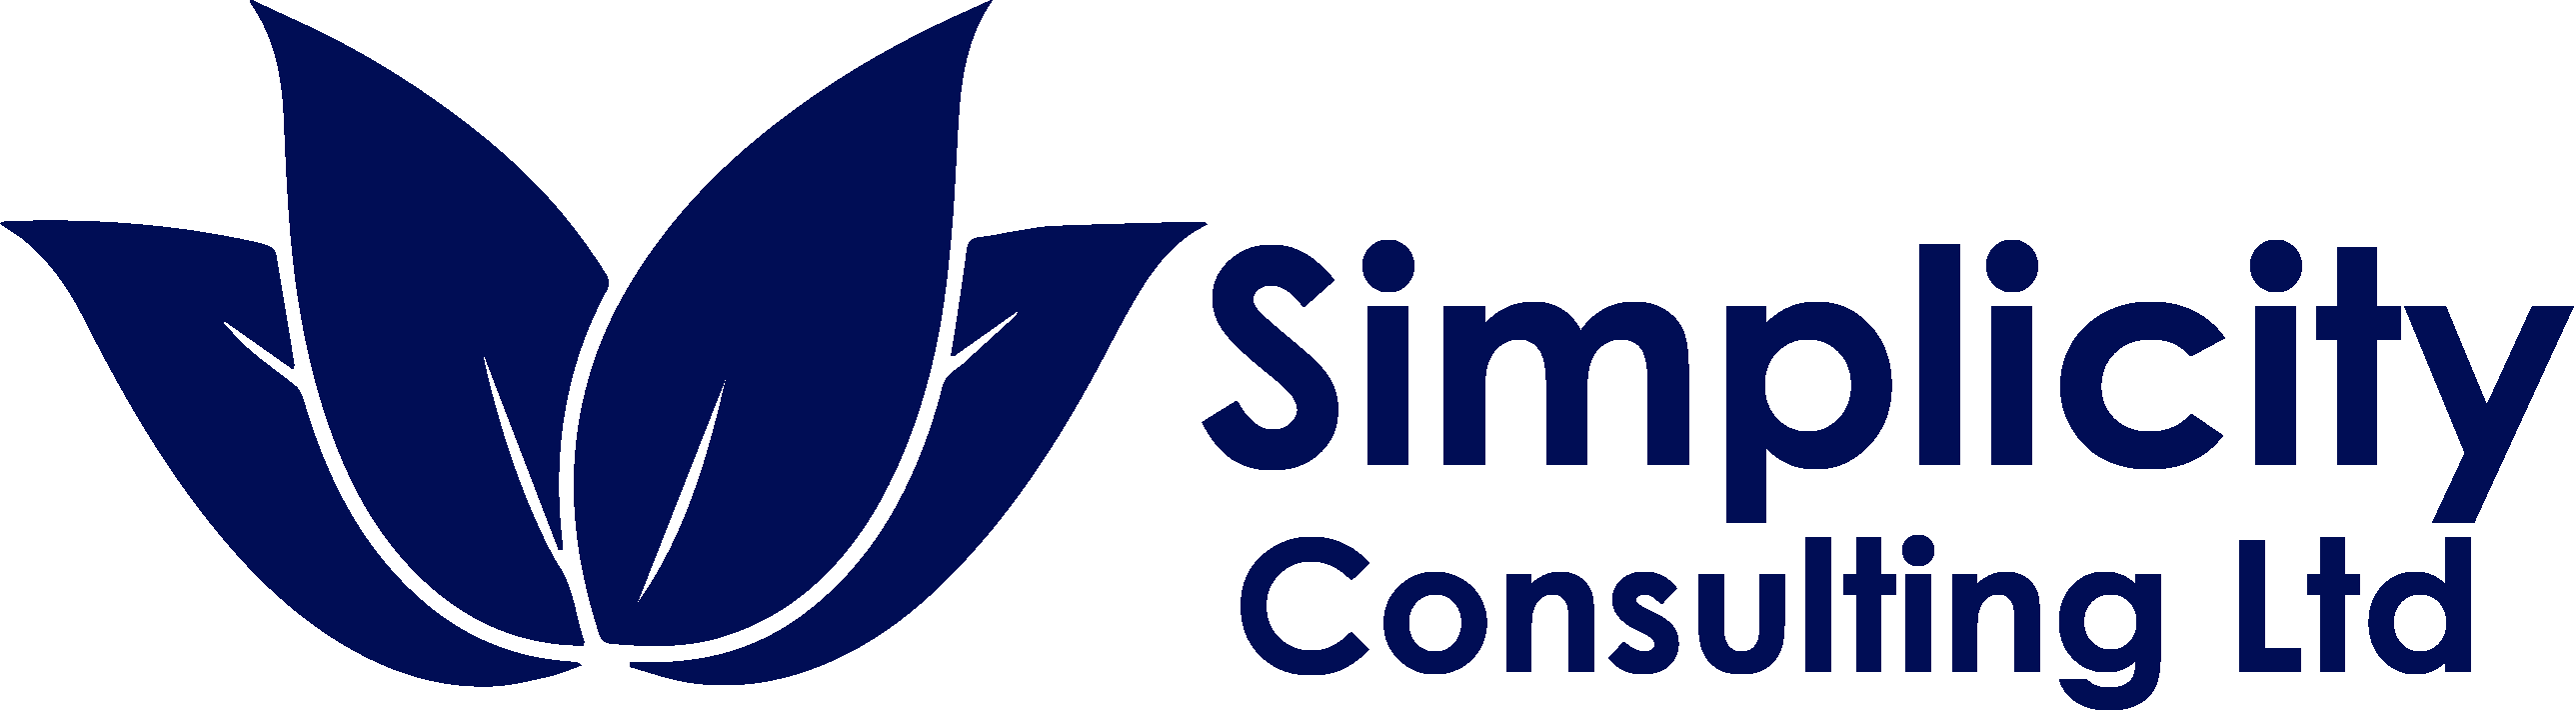 Simplicity Consulting Ltd